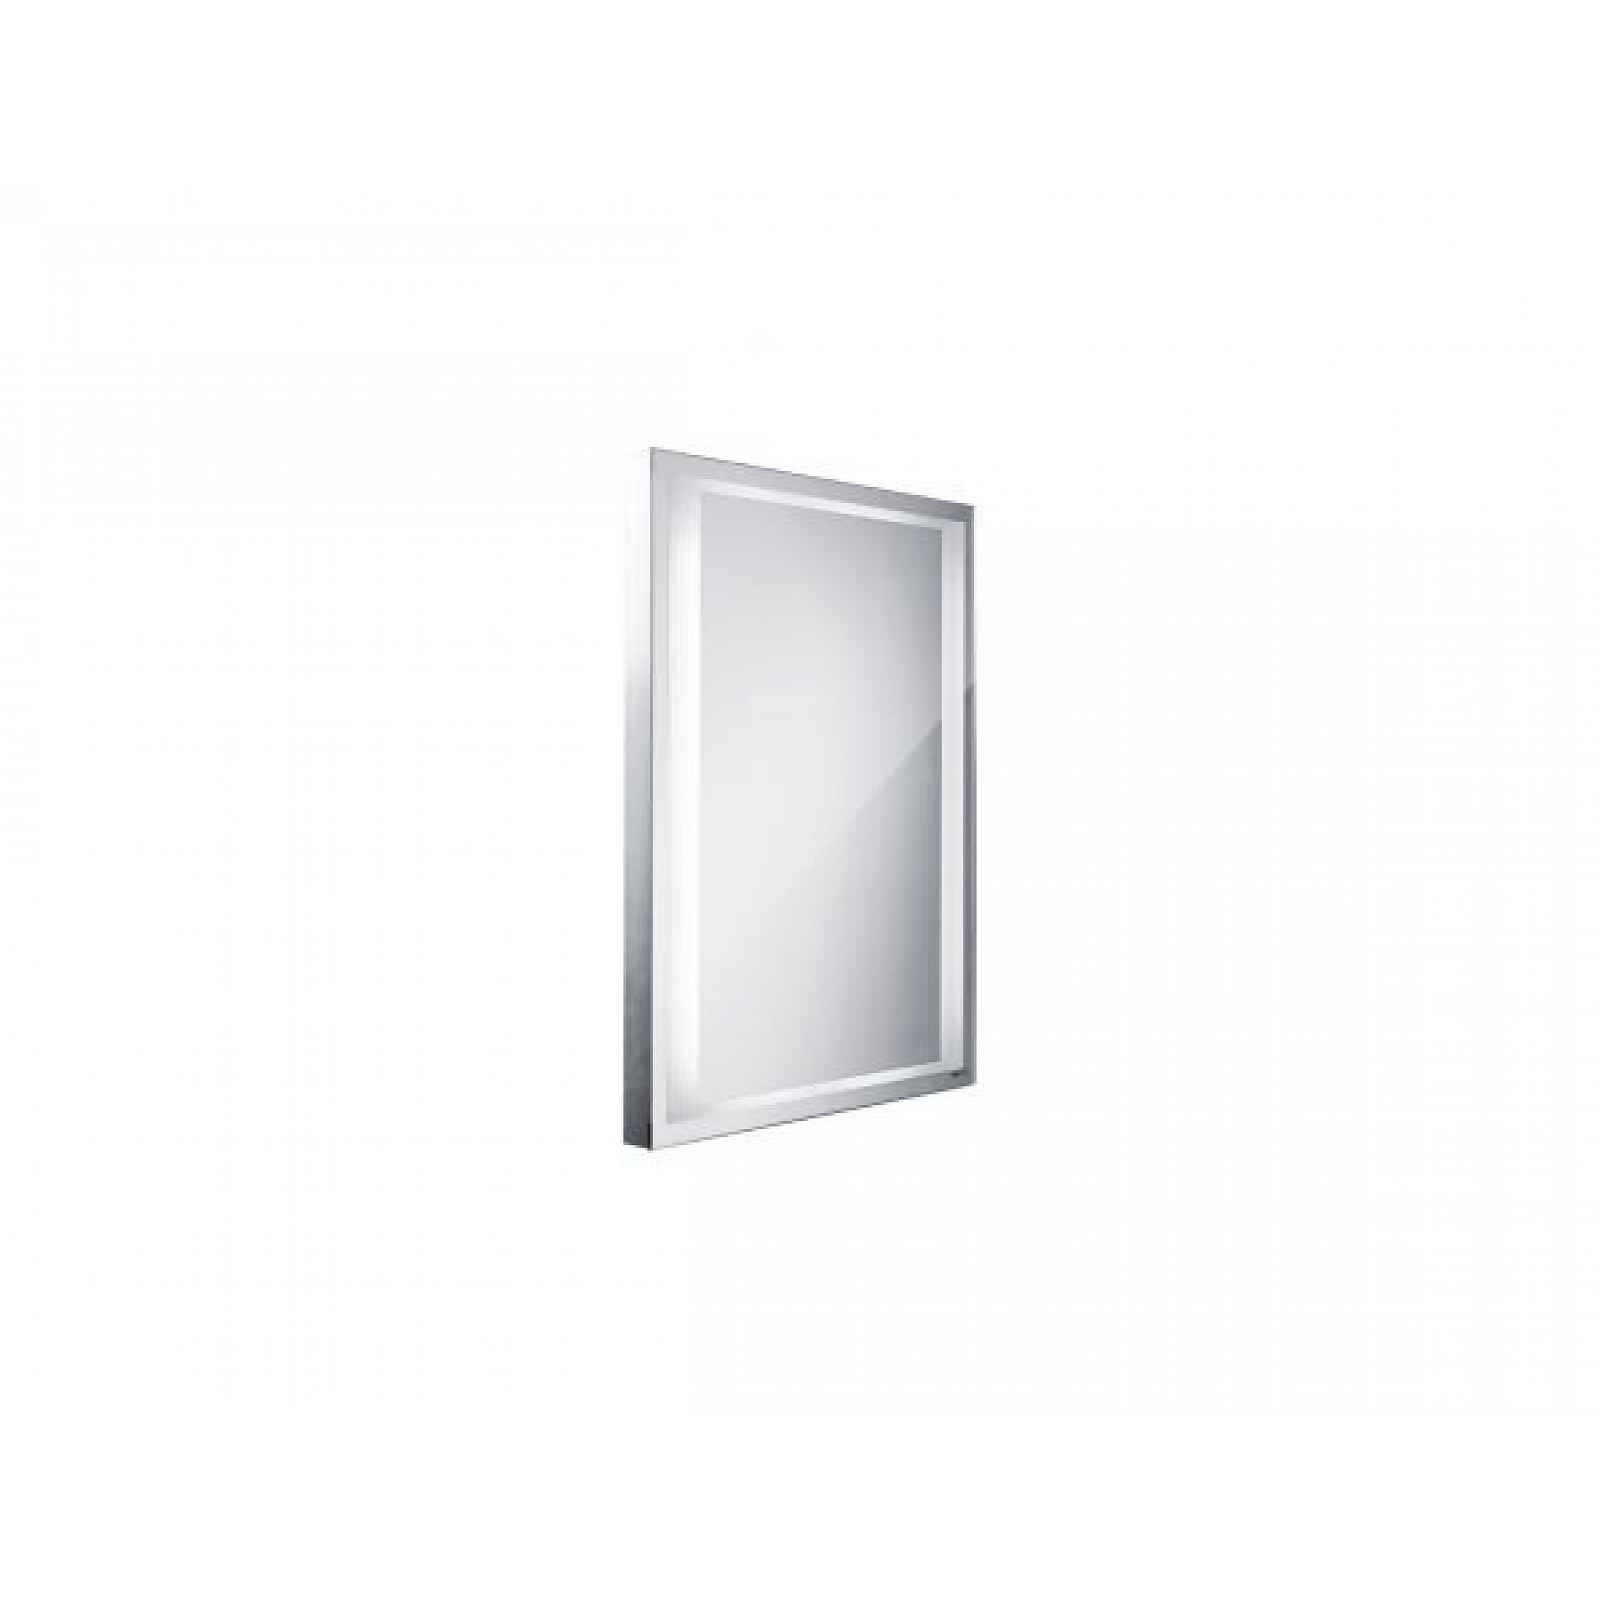 Zrcadlo bez vypínače Nimco 60x80 cm hliník ZP 4001